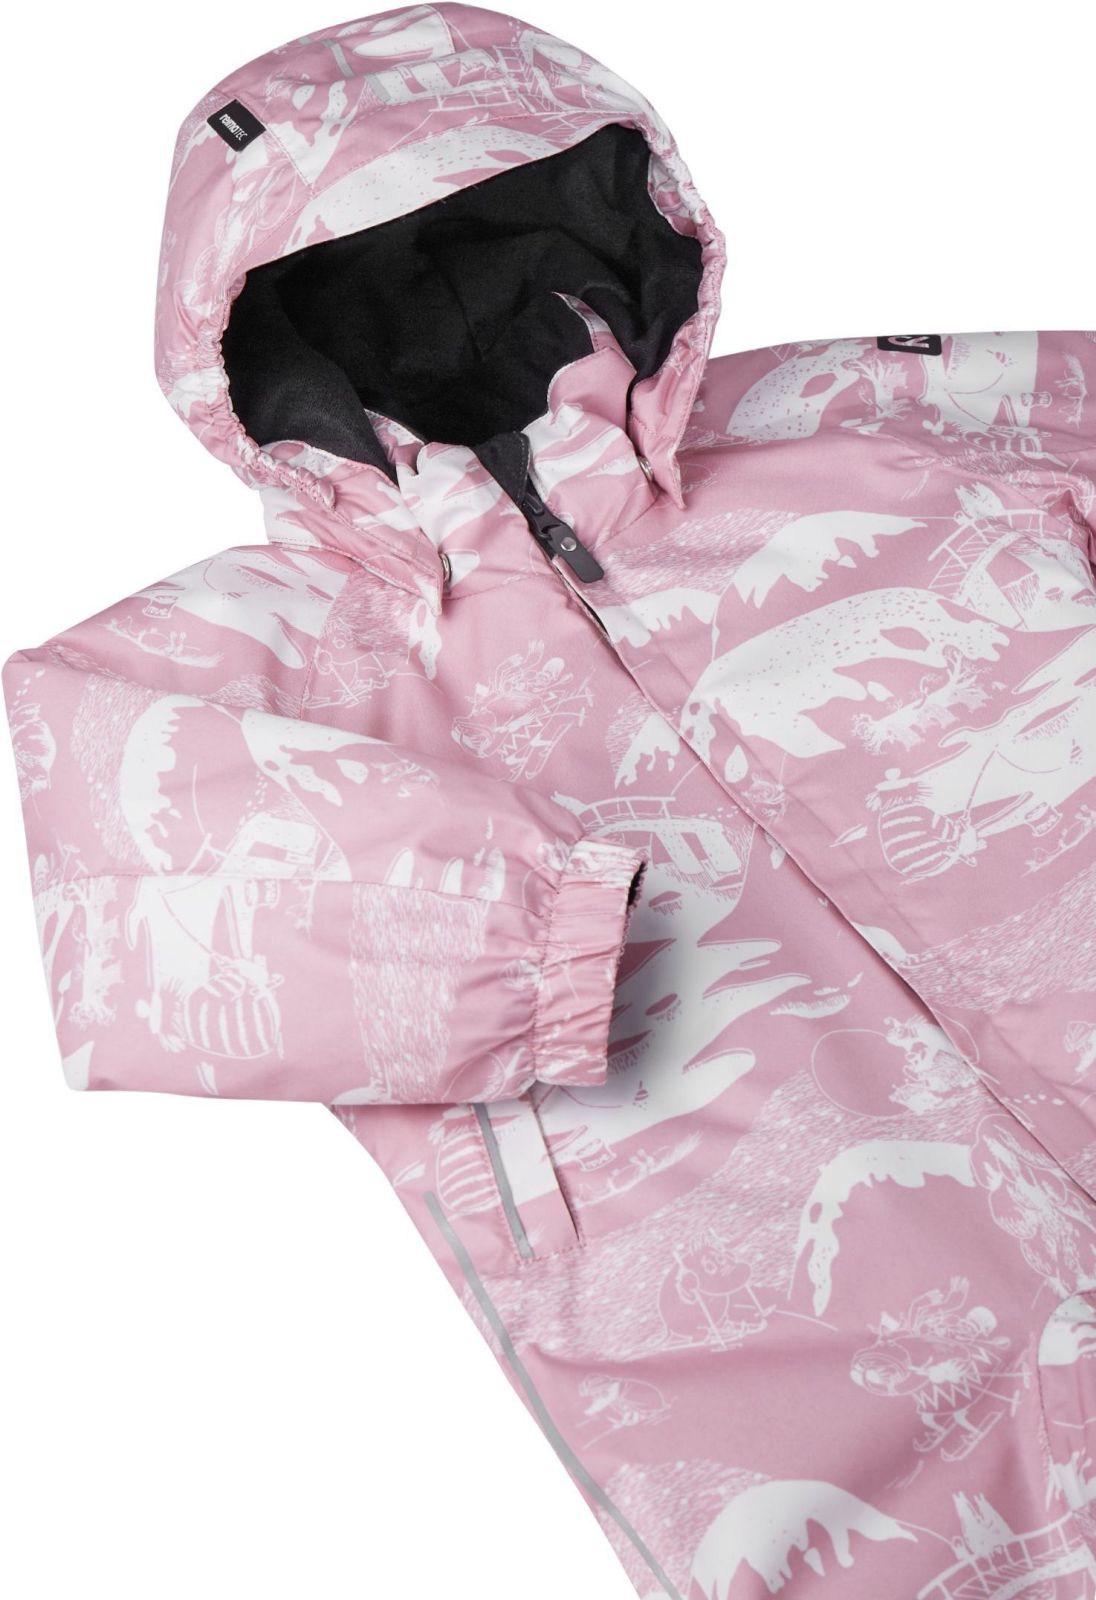 510376-4551_Reima Moomin Lyster - Rosy pink zimna ruzova kombineza na zimu pre dievcata